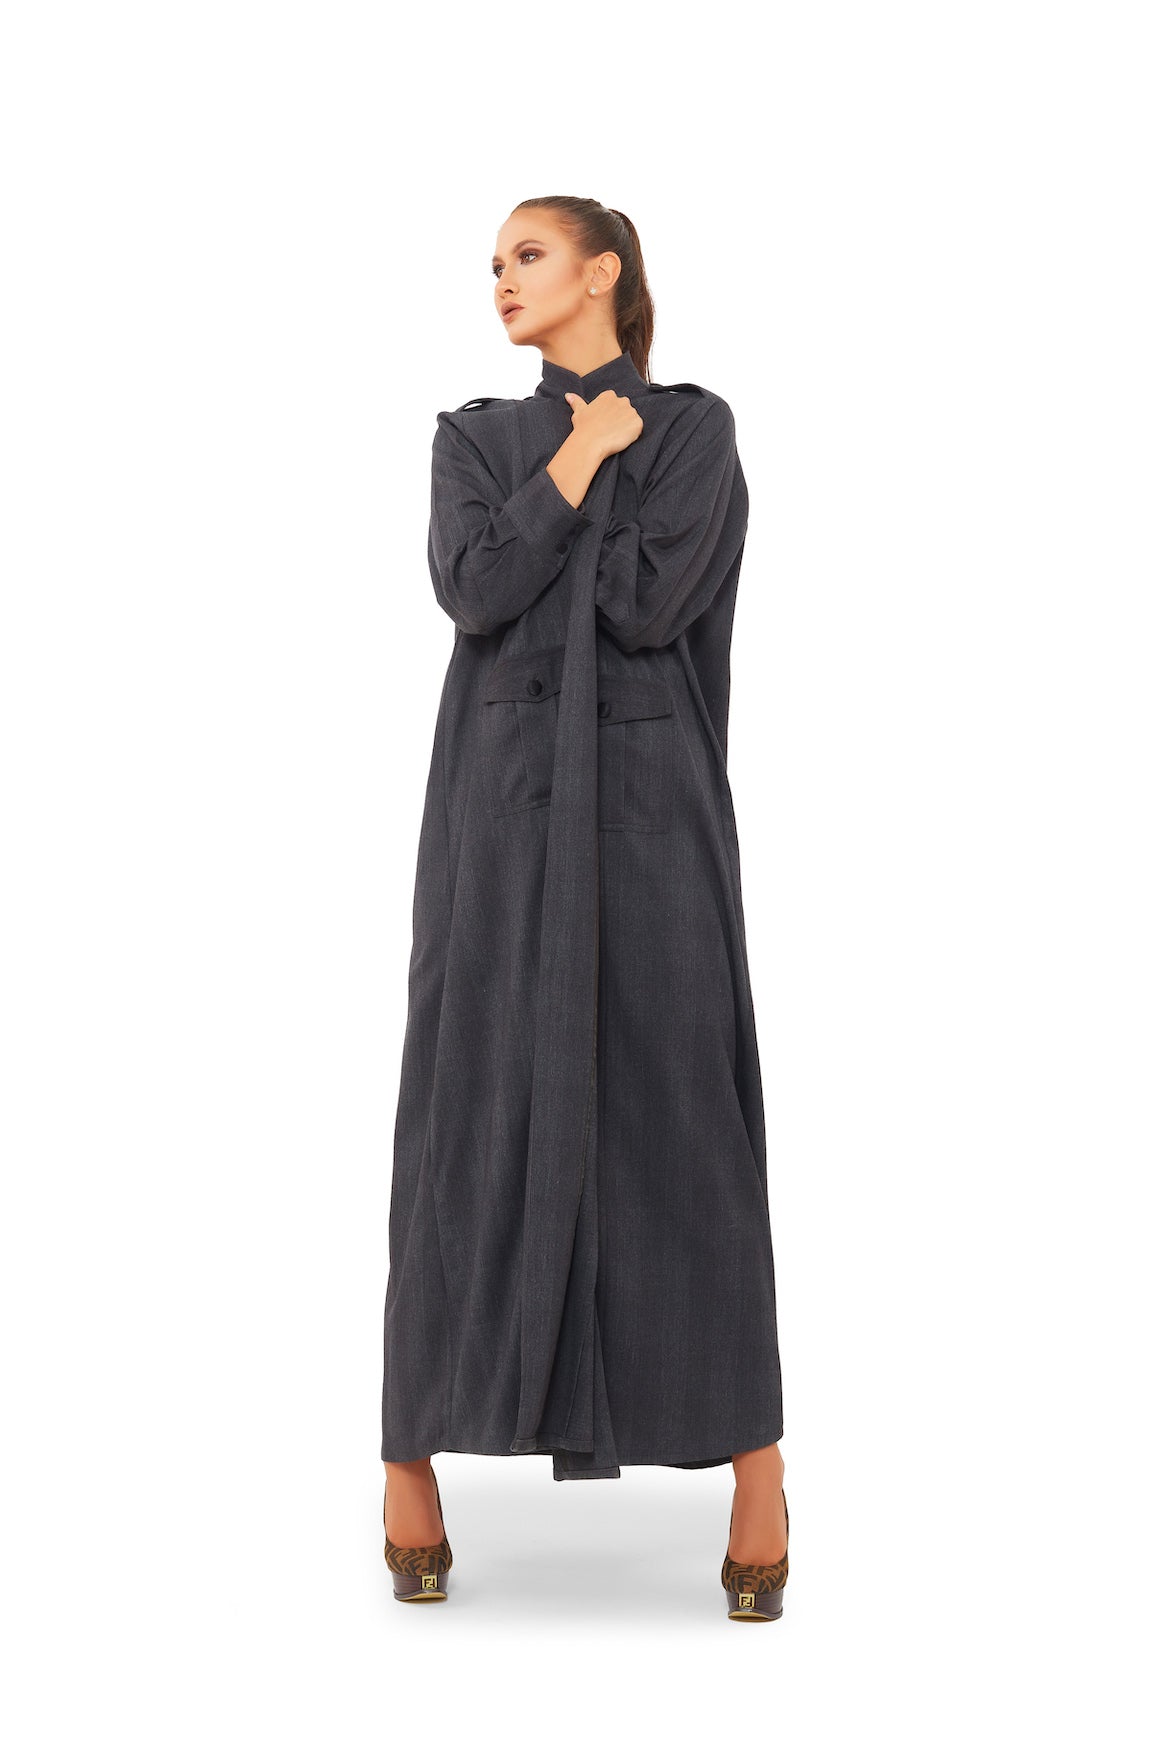 The Modern Elegance Trench Abaya